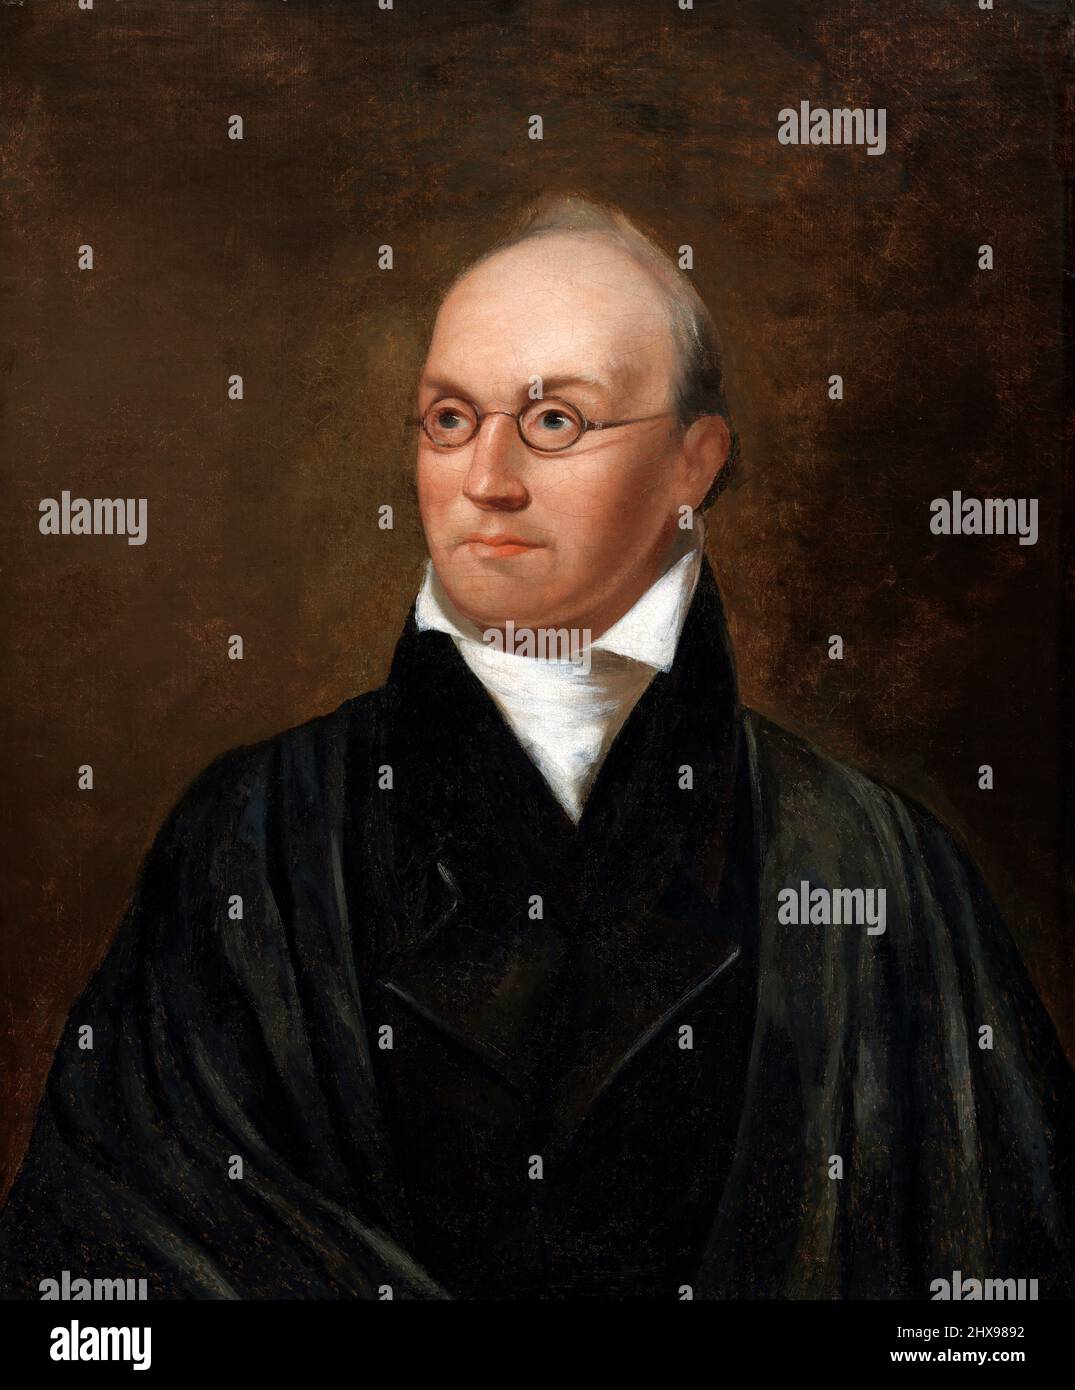 Portrait of United States Supreme Court Justice, Joseph Story (1779-1845) von Chester Harding, Öl auf Leinwand, 1827 Stockfoto